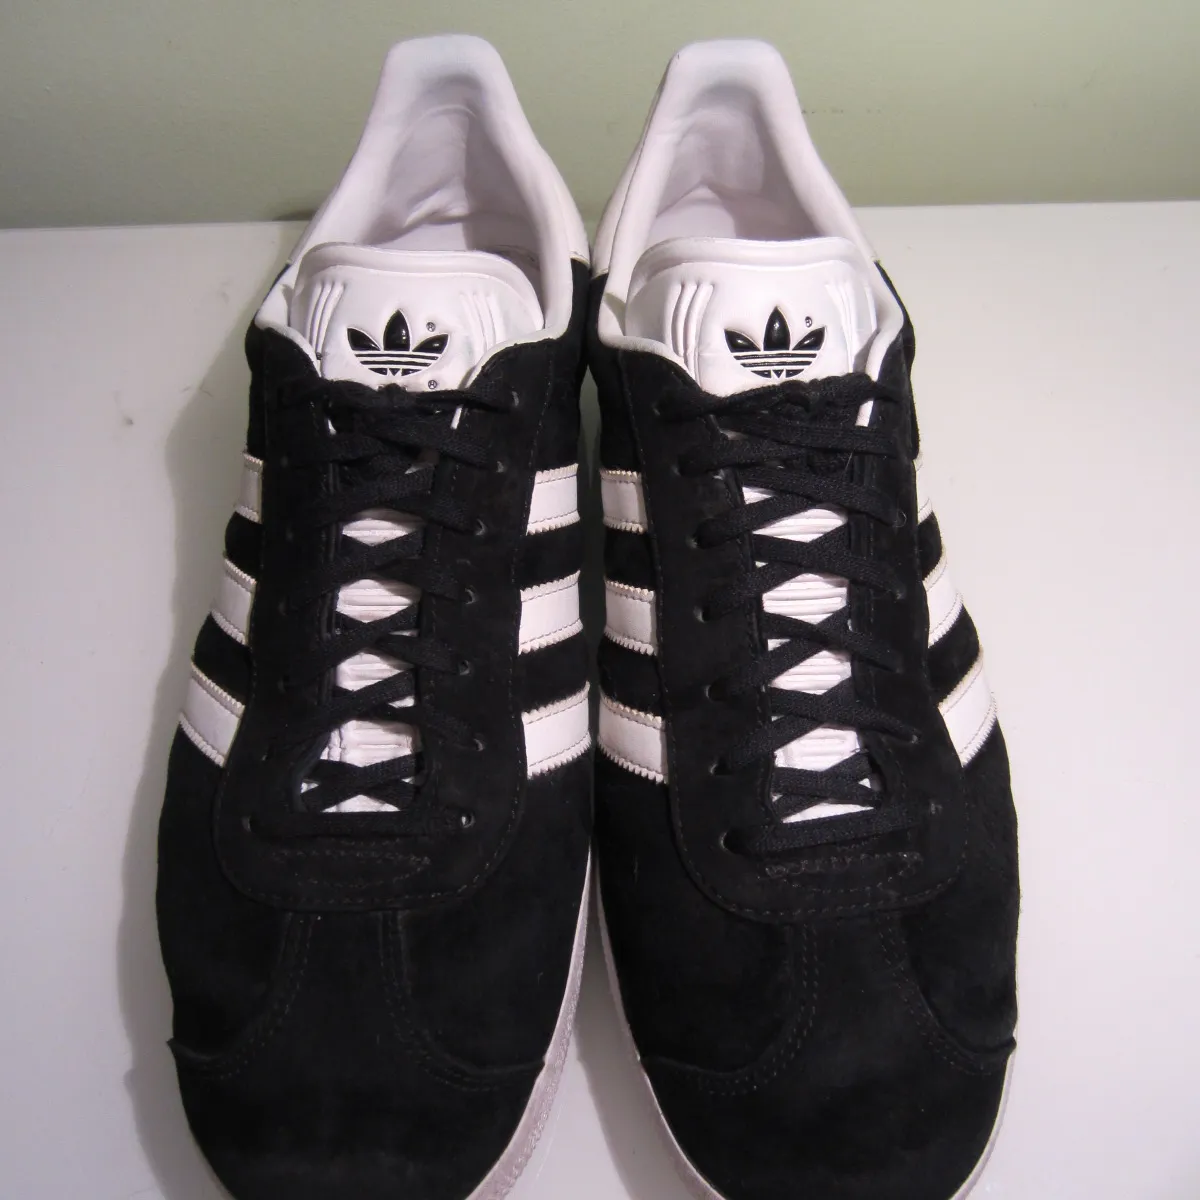 Adidas Men's Gazelle Shoes/Sneakers - Black/White - Size 10.5 photo 1